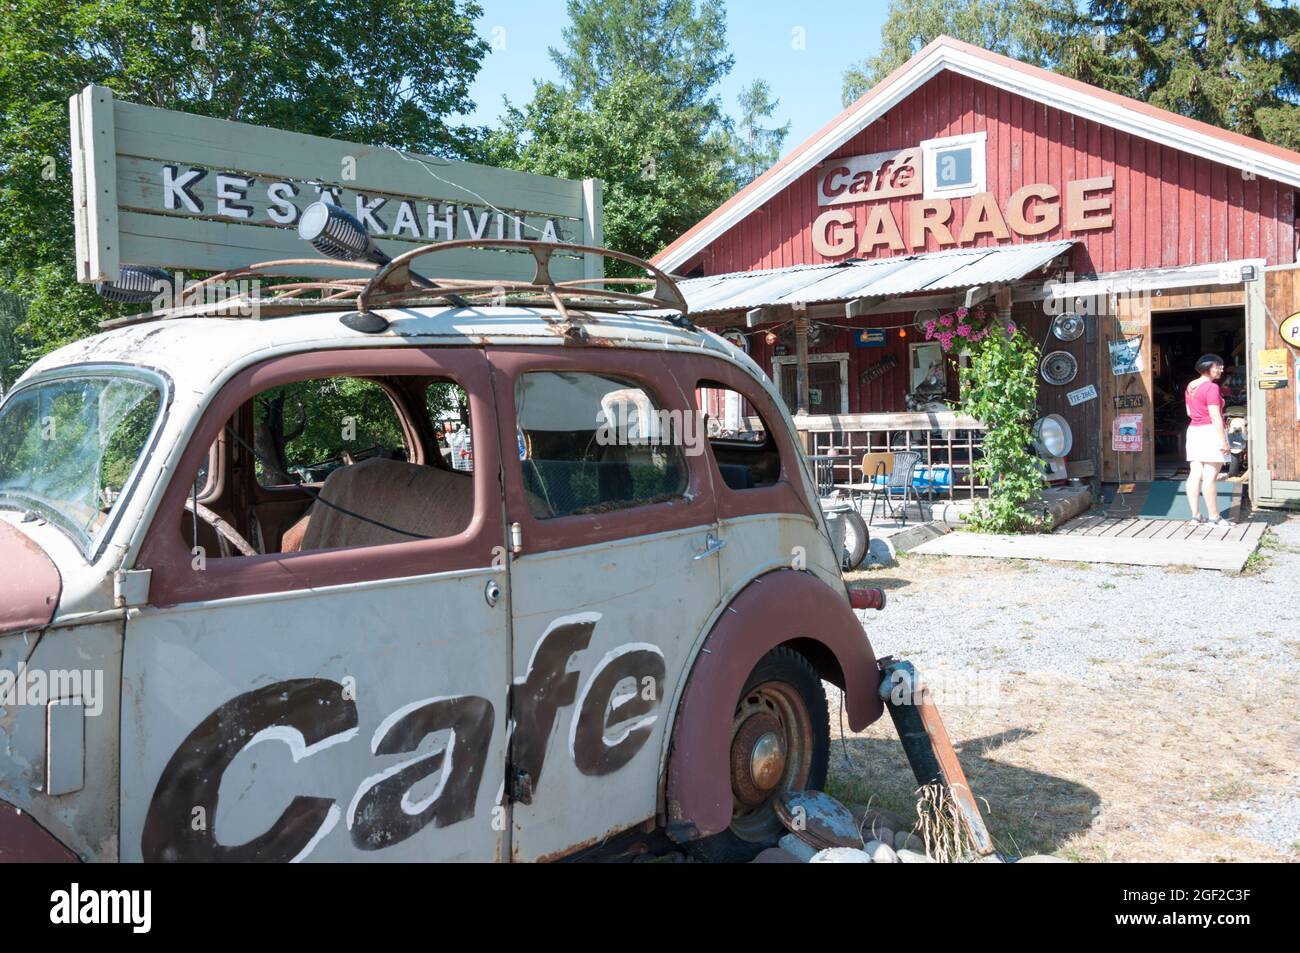 Cafe Garage Vammala Finland Stock Photo